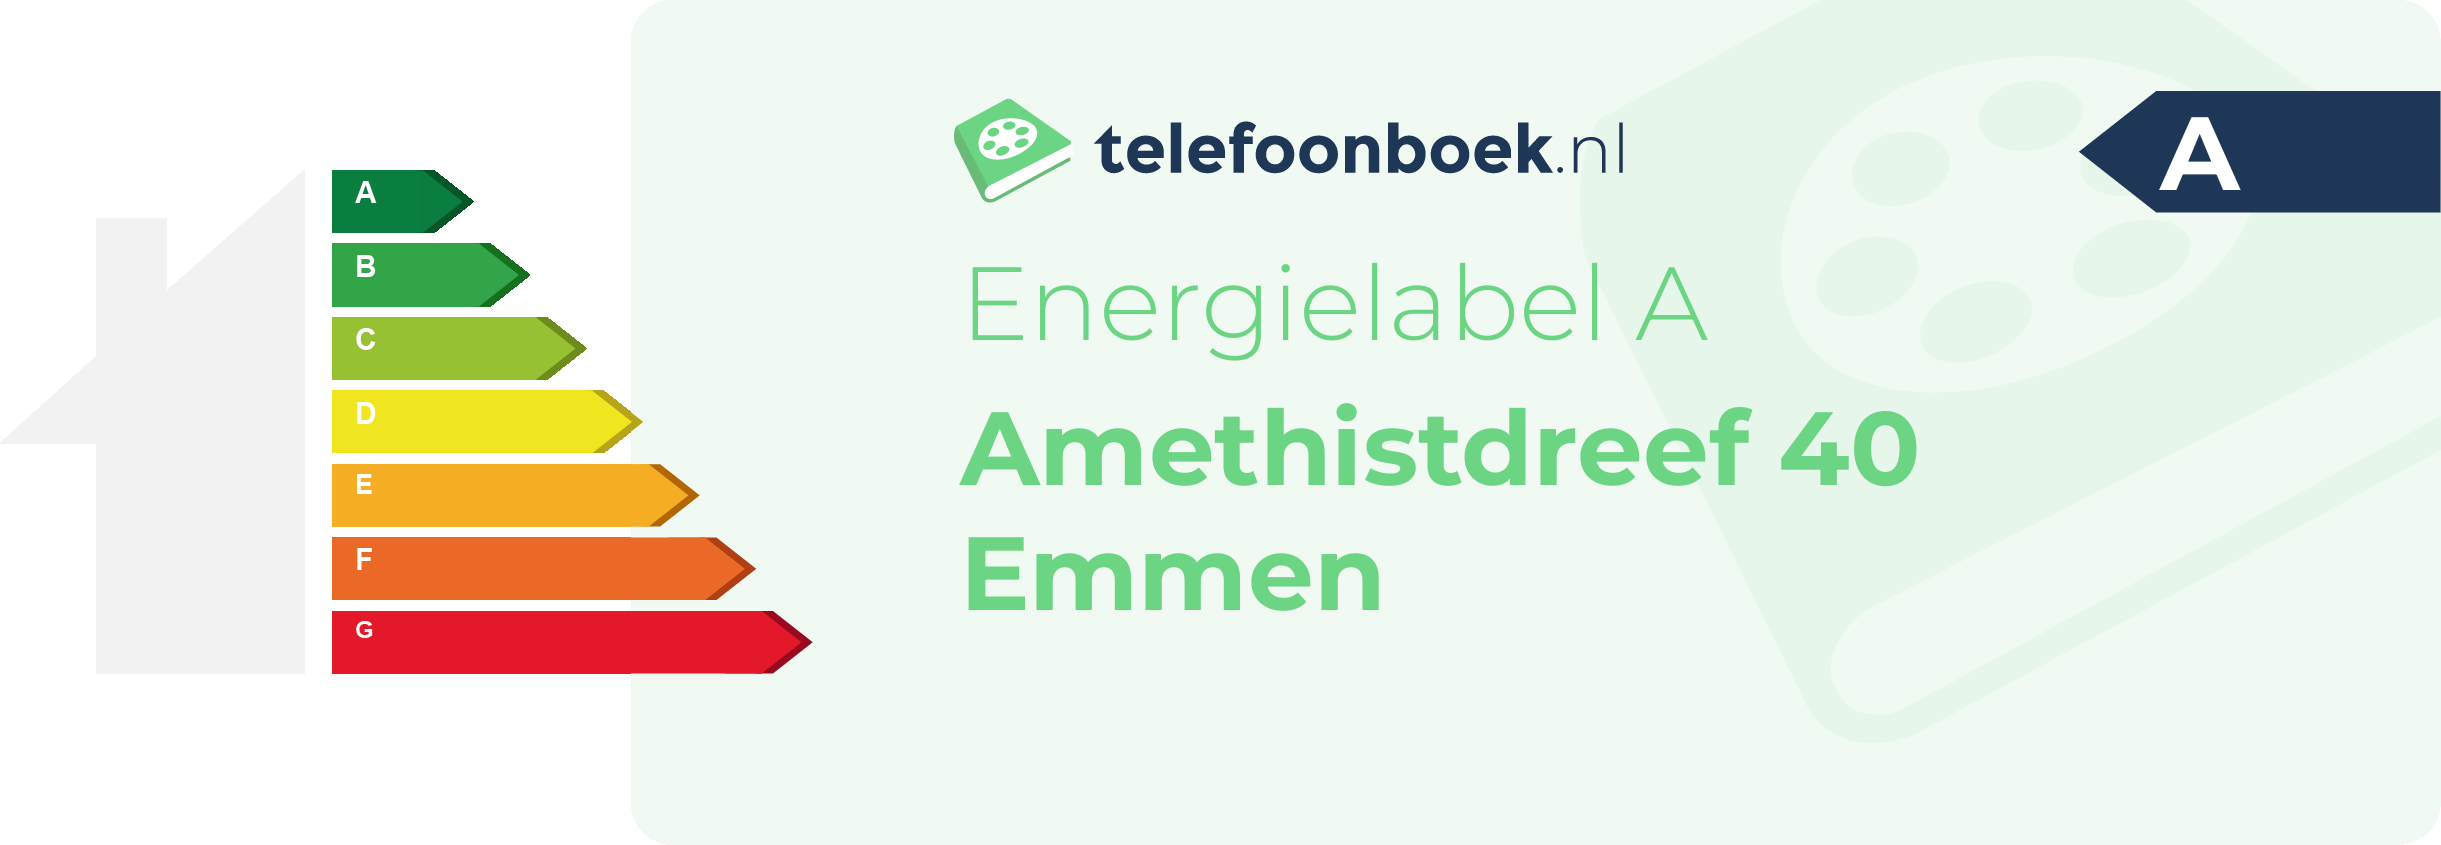 Energielabel Amethistdreef 40 Emmen